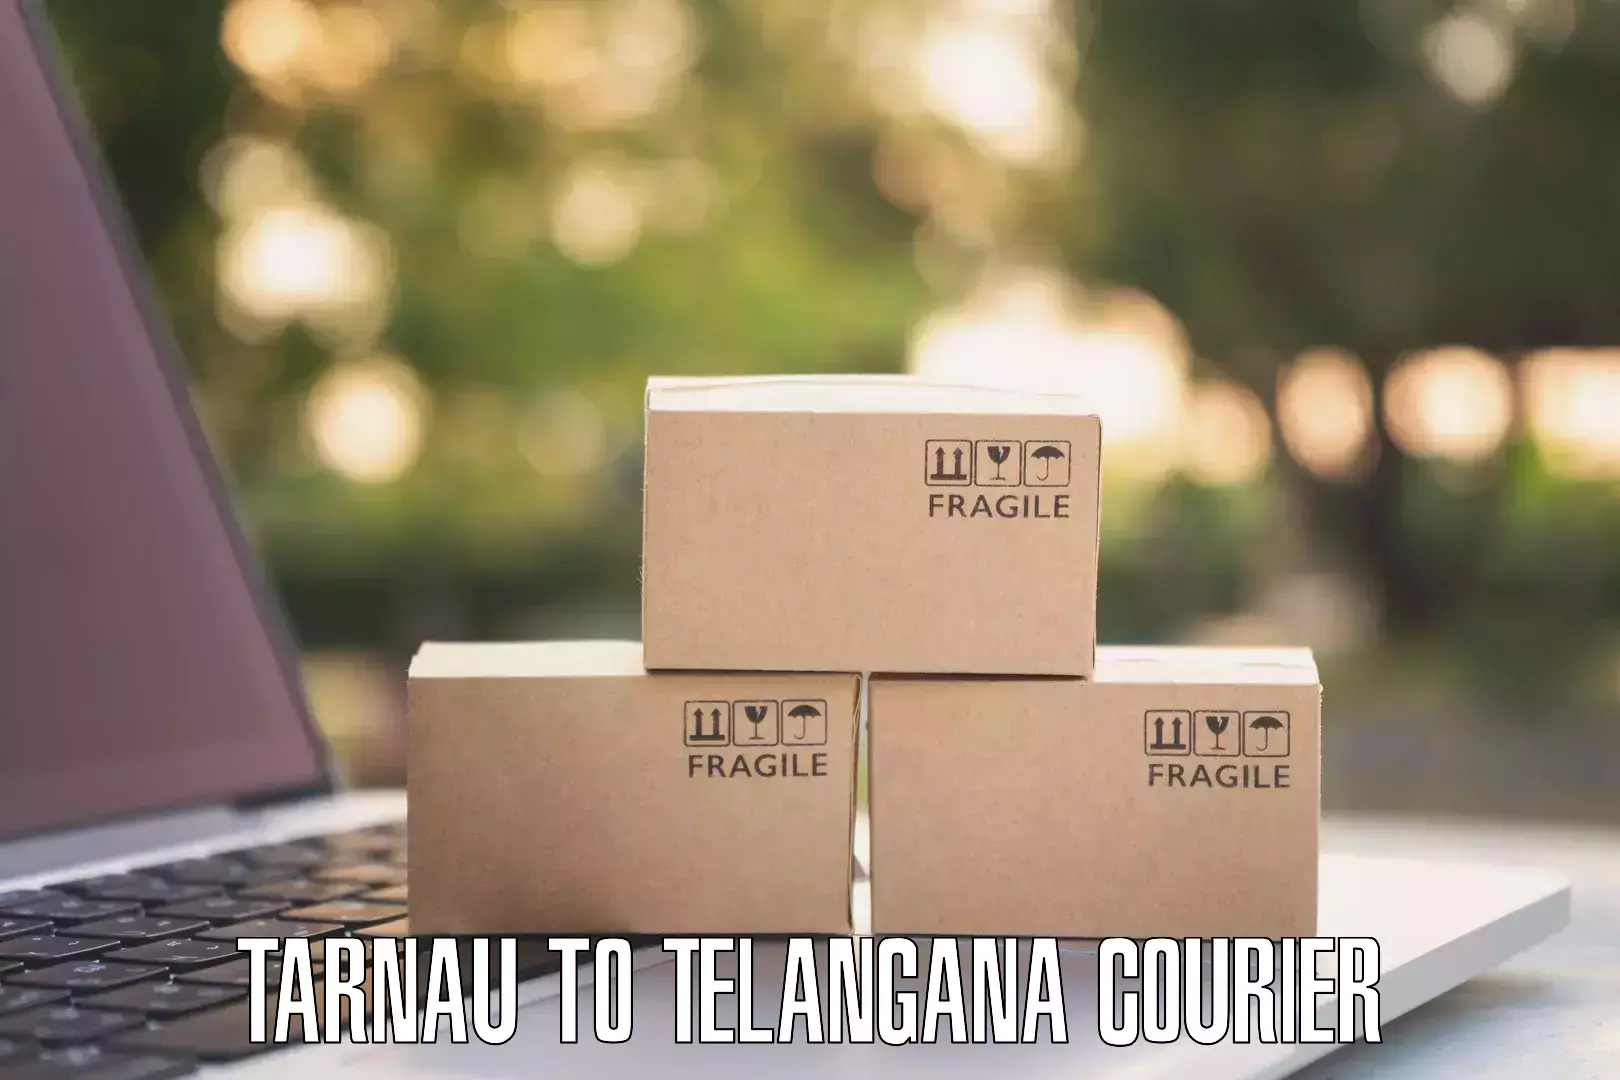 High-capacity parcel service in Tarnau to Amangal